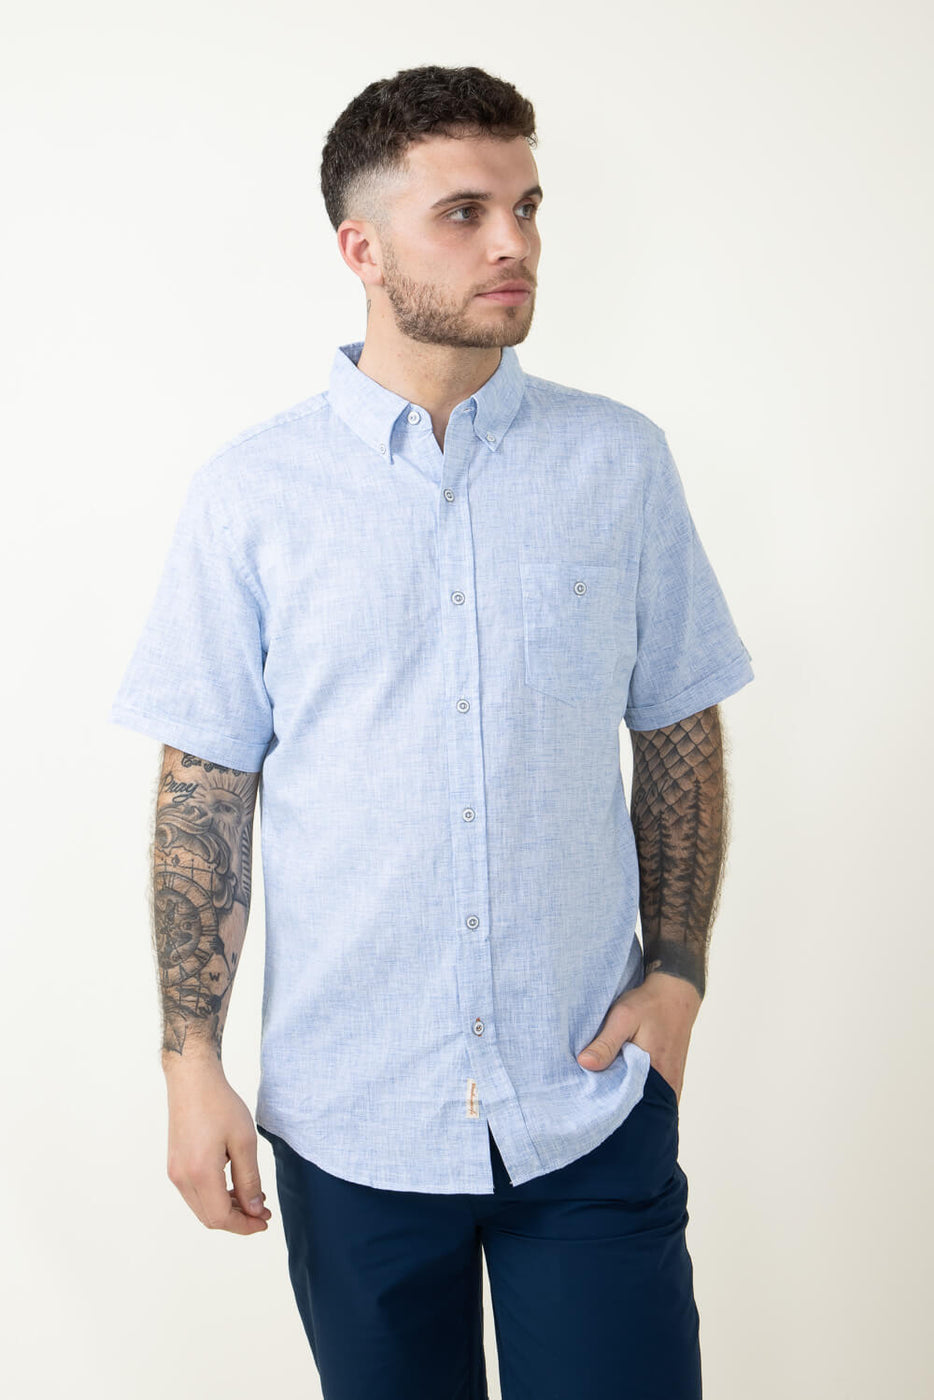 Weatherproof Vintage Linen Button Down Shirt for Men in Light Blue 